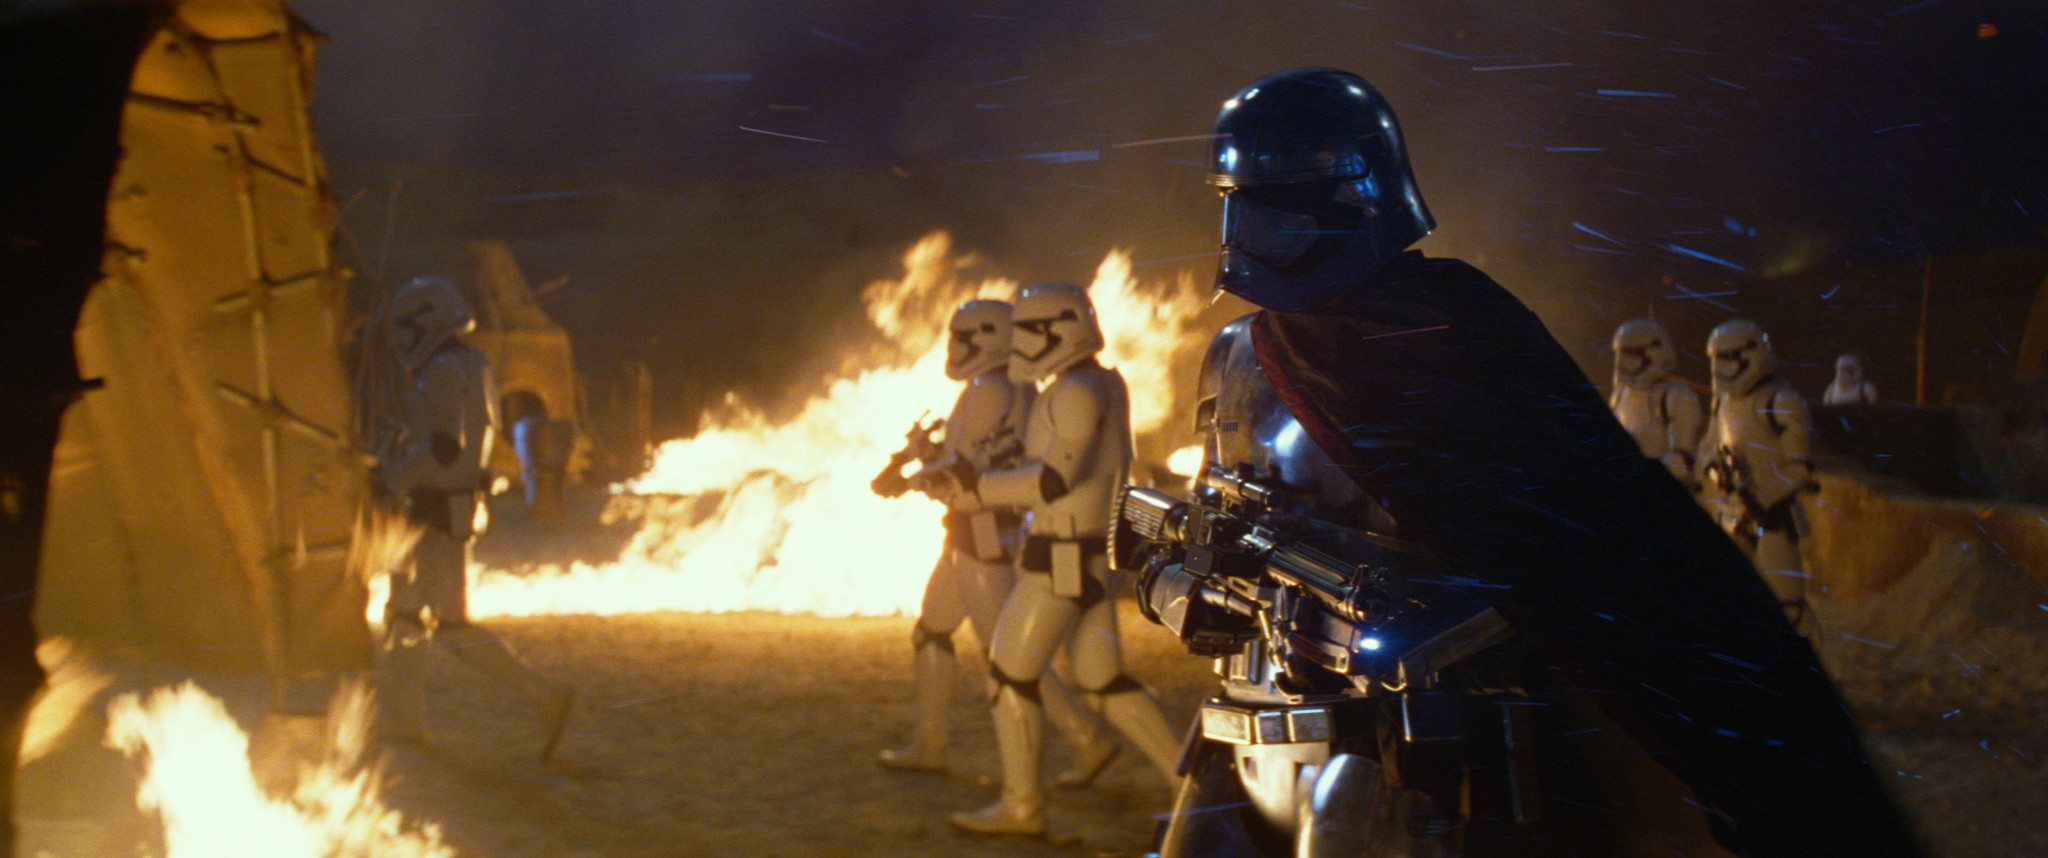 star wars episode the force awakens full movie